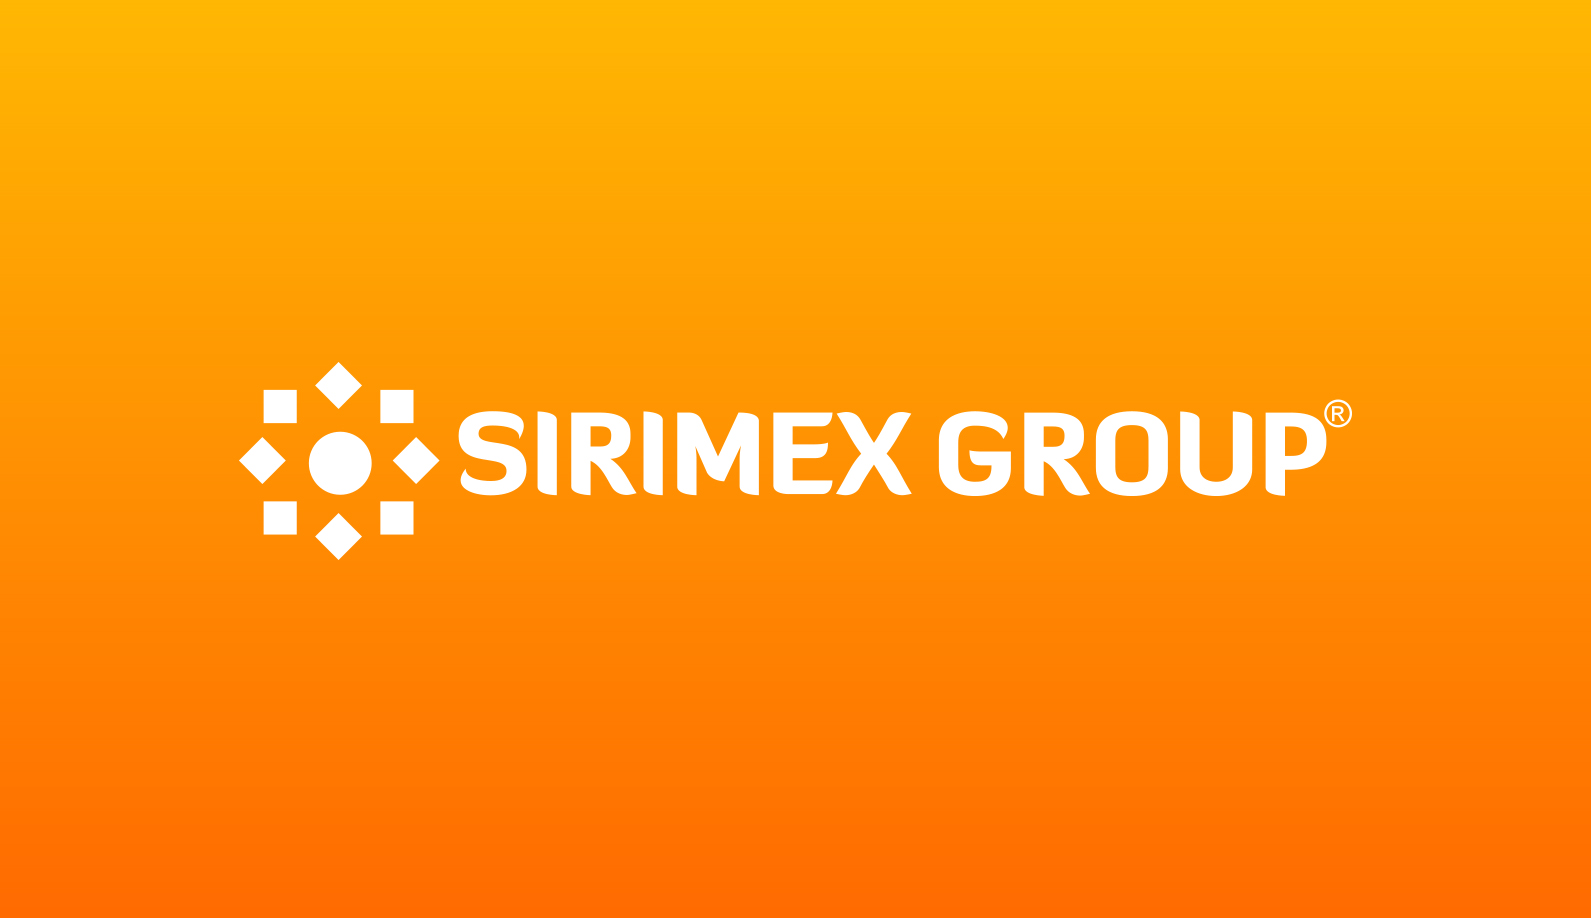 Sirimex Group